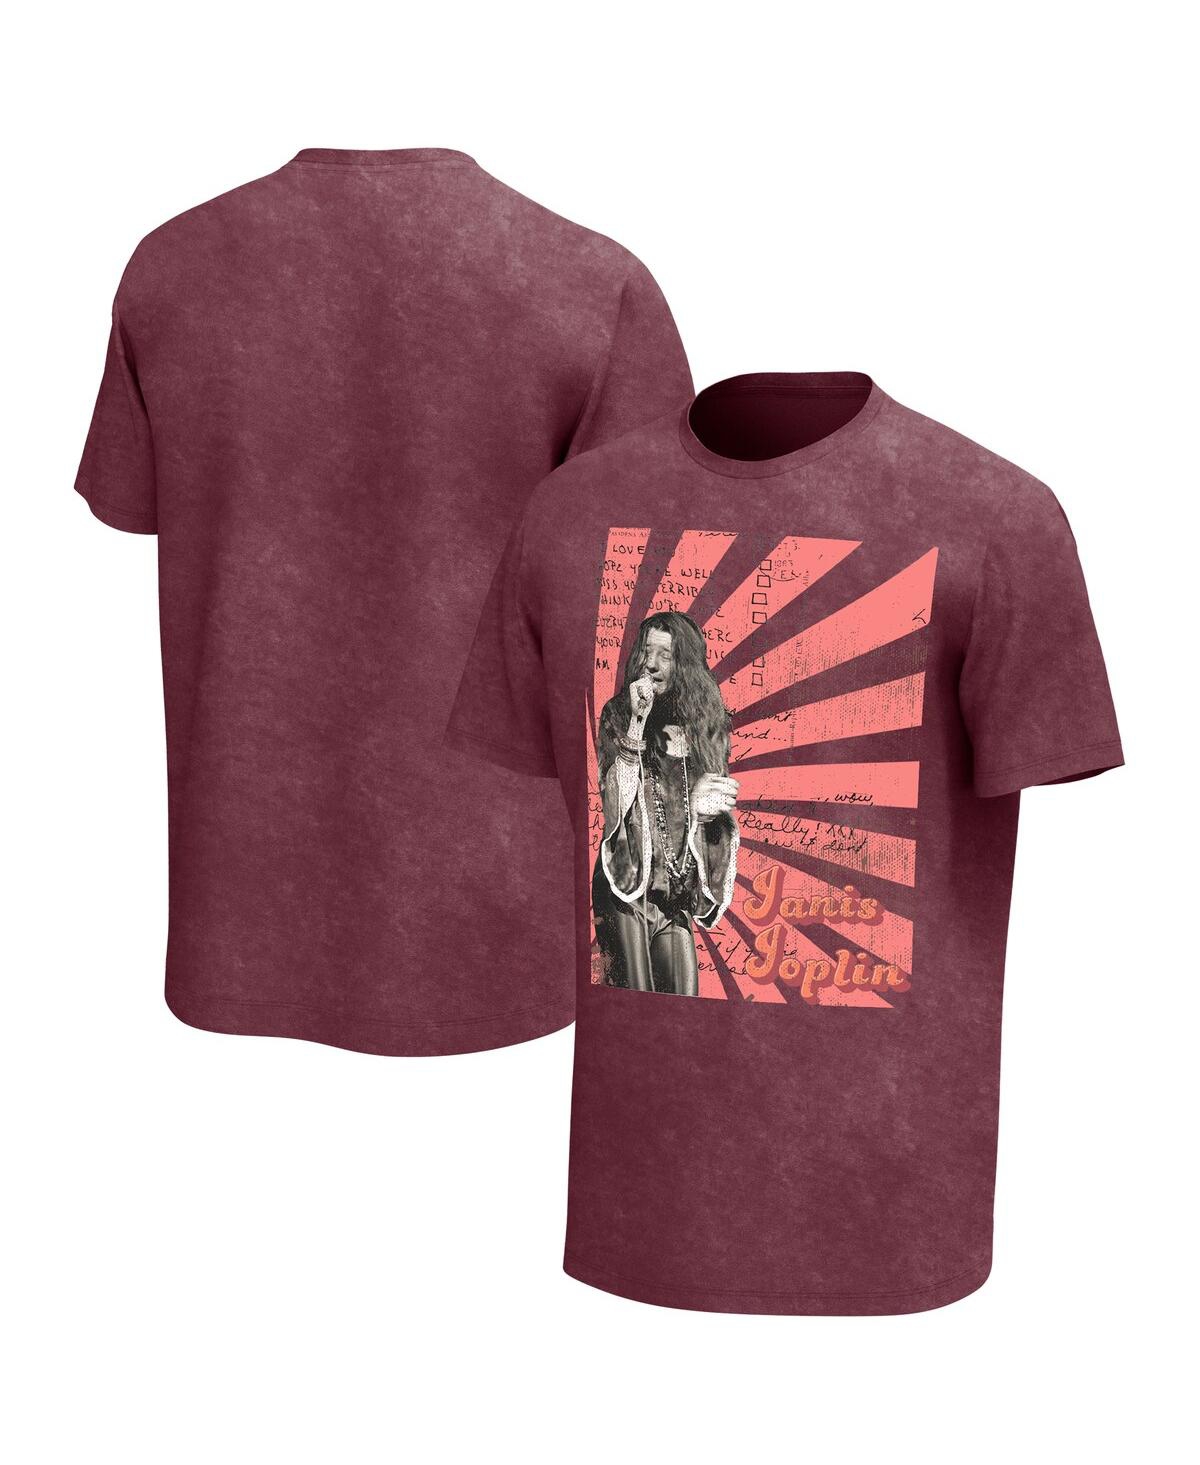 Men's Maroon Distressed Janis Joplin Scripts Washed Graphic T-shirt - Maroon